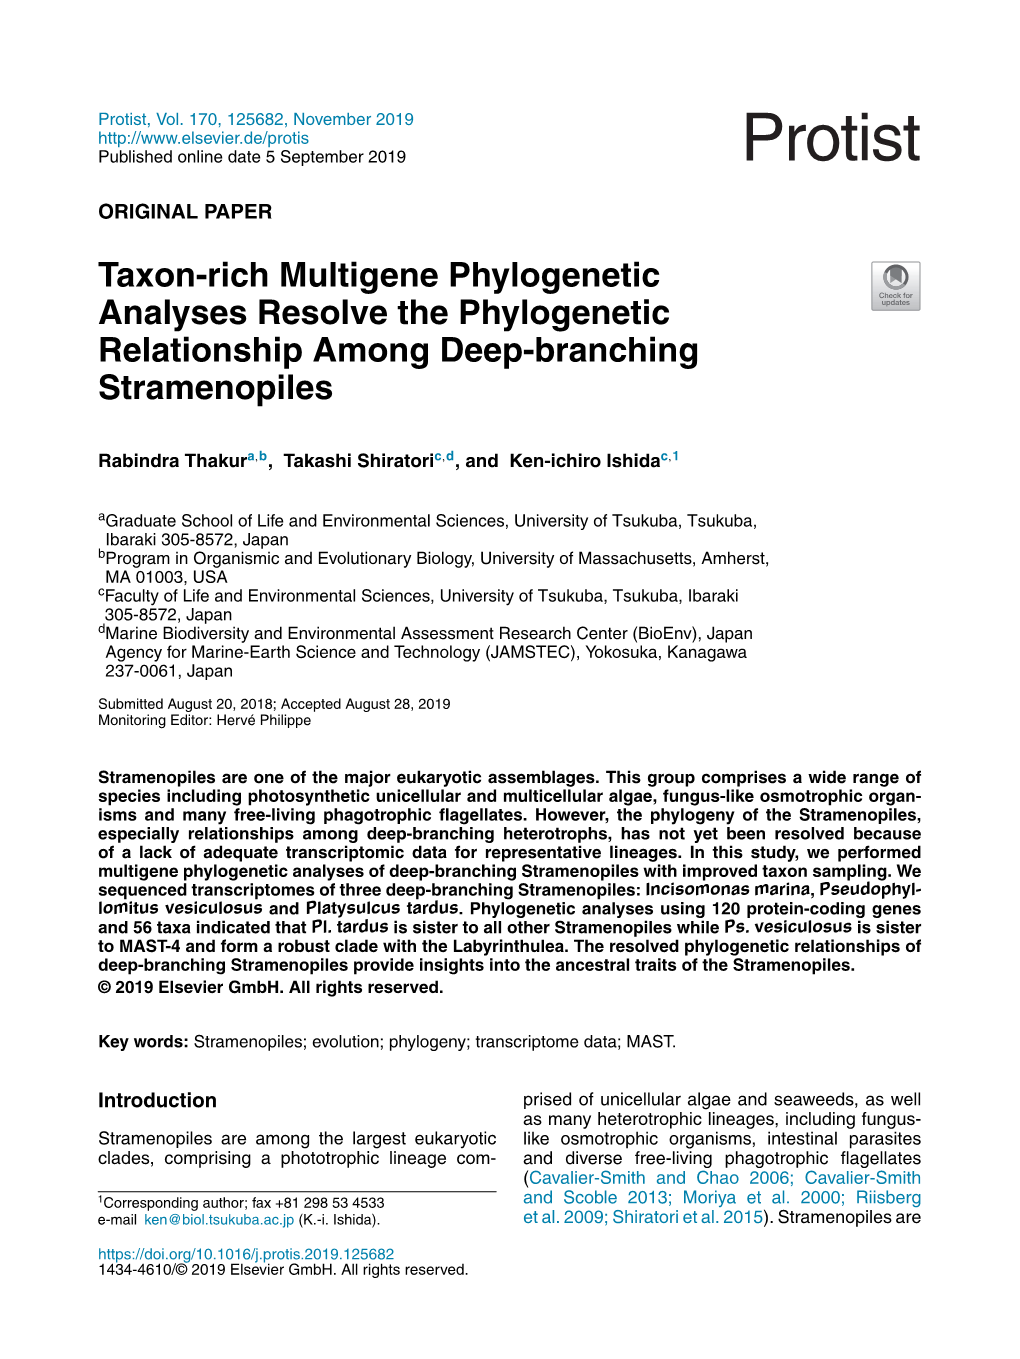 Taxon-Rich Multigene Phylogenetic Analyses Resolve the Phylogenetic Relationship Among Deep-Branching Stramenopiles 3